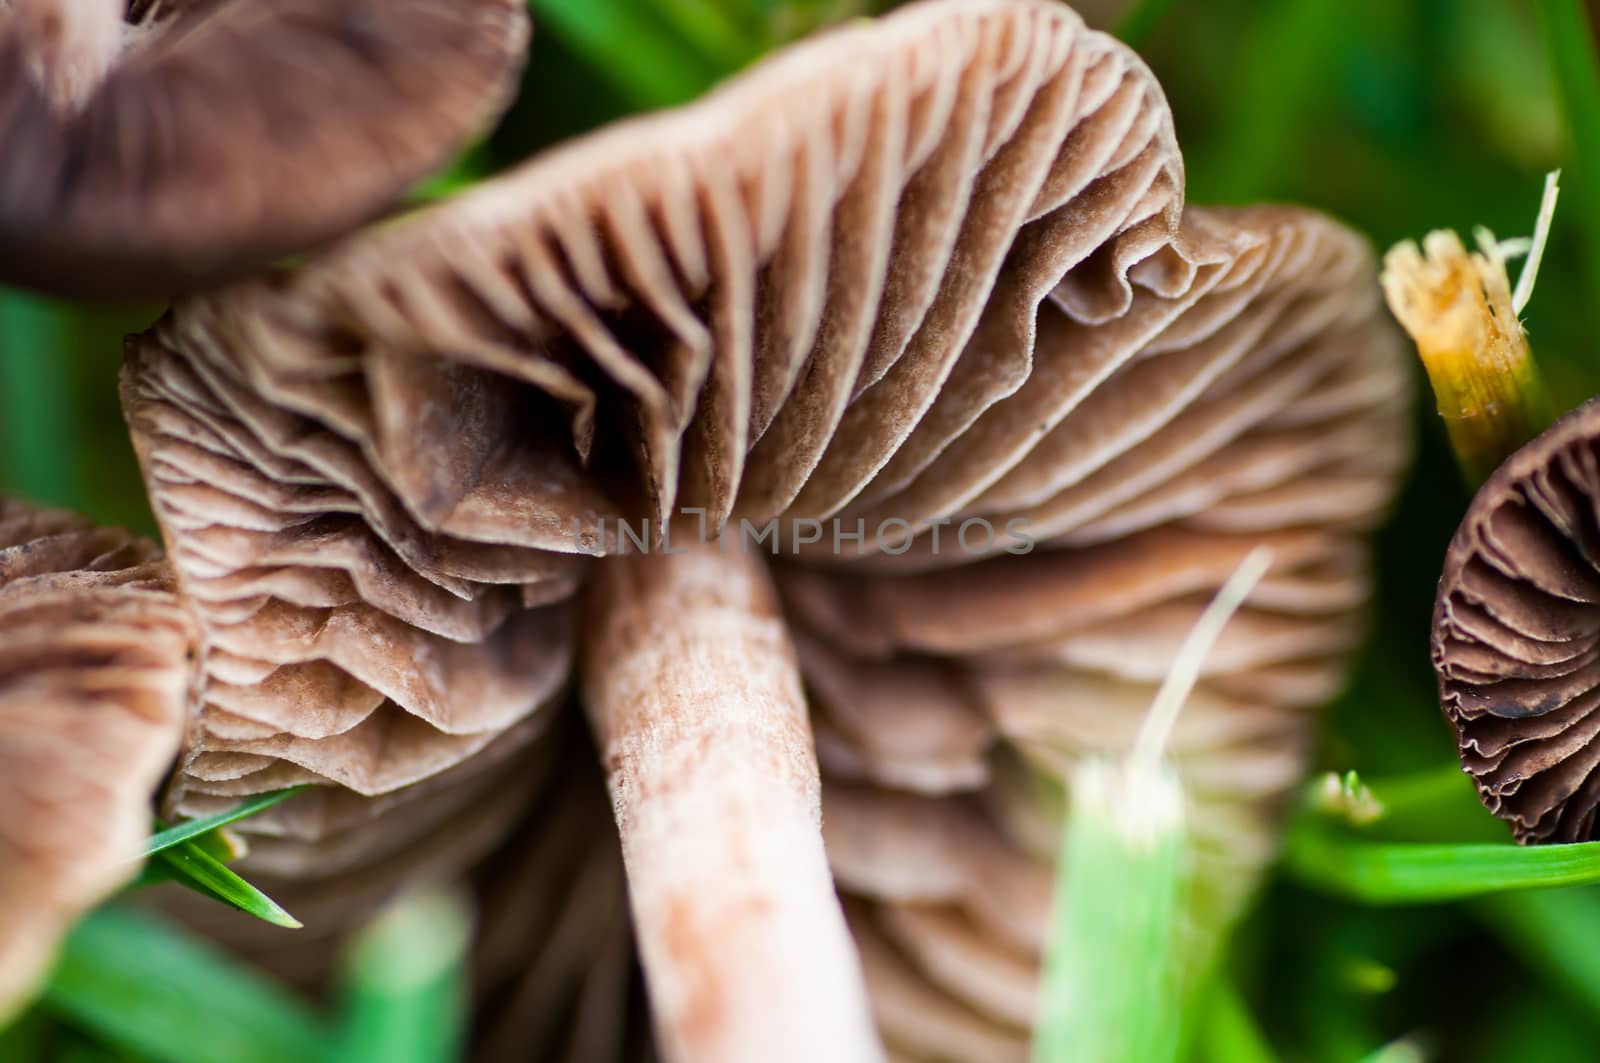 Grass on Mushrooms by bartystewart